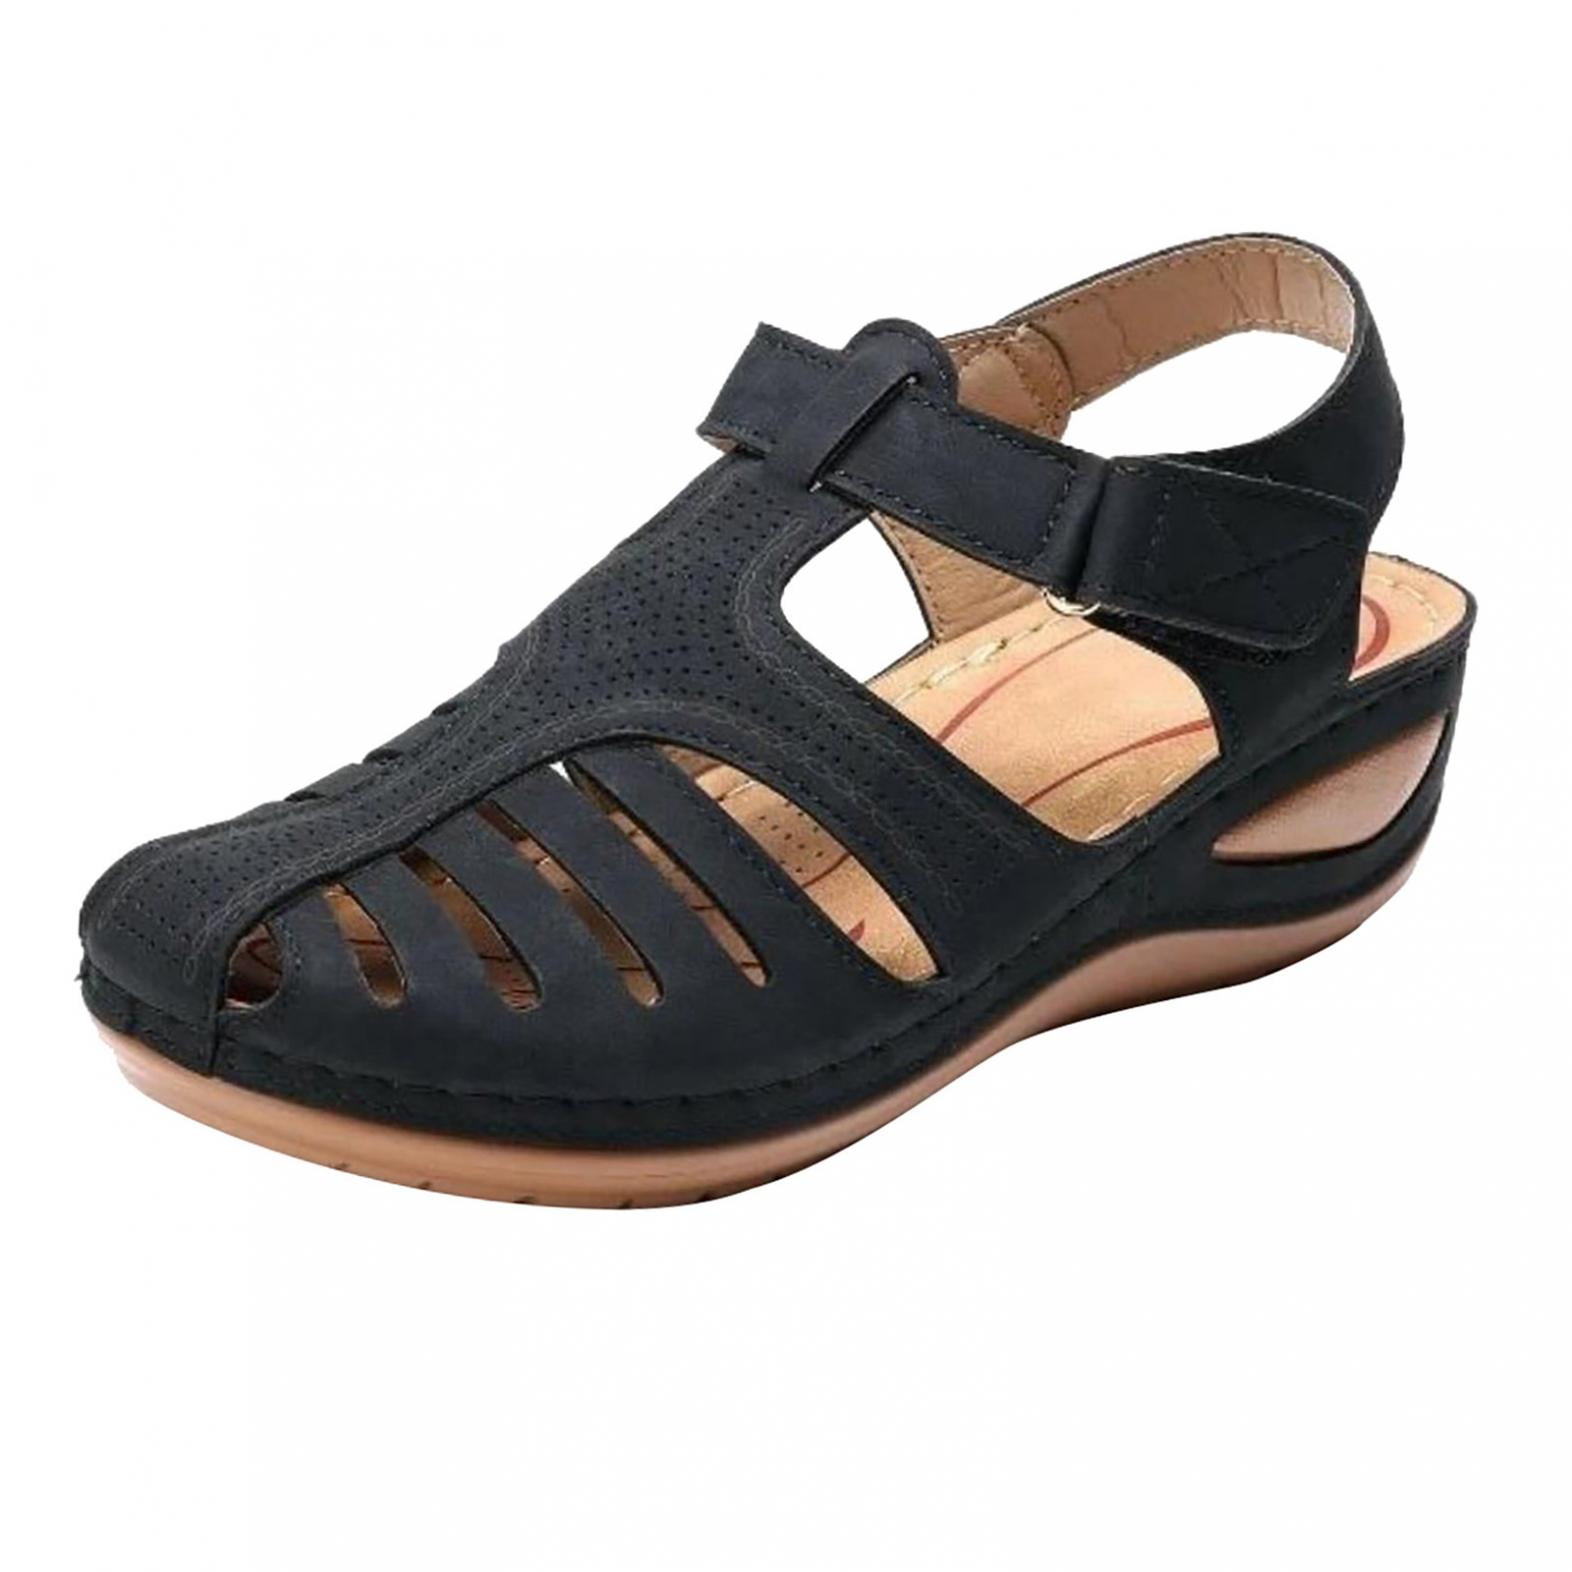 Women's Sandal Closed Toe Buckle Strap Hollow Wedge Platform Ankle Length Comfortable Ladies Shoes 